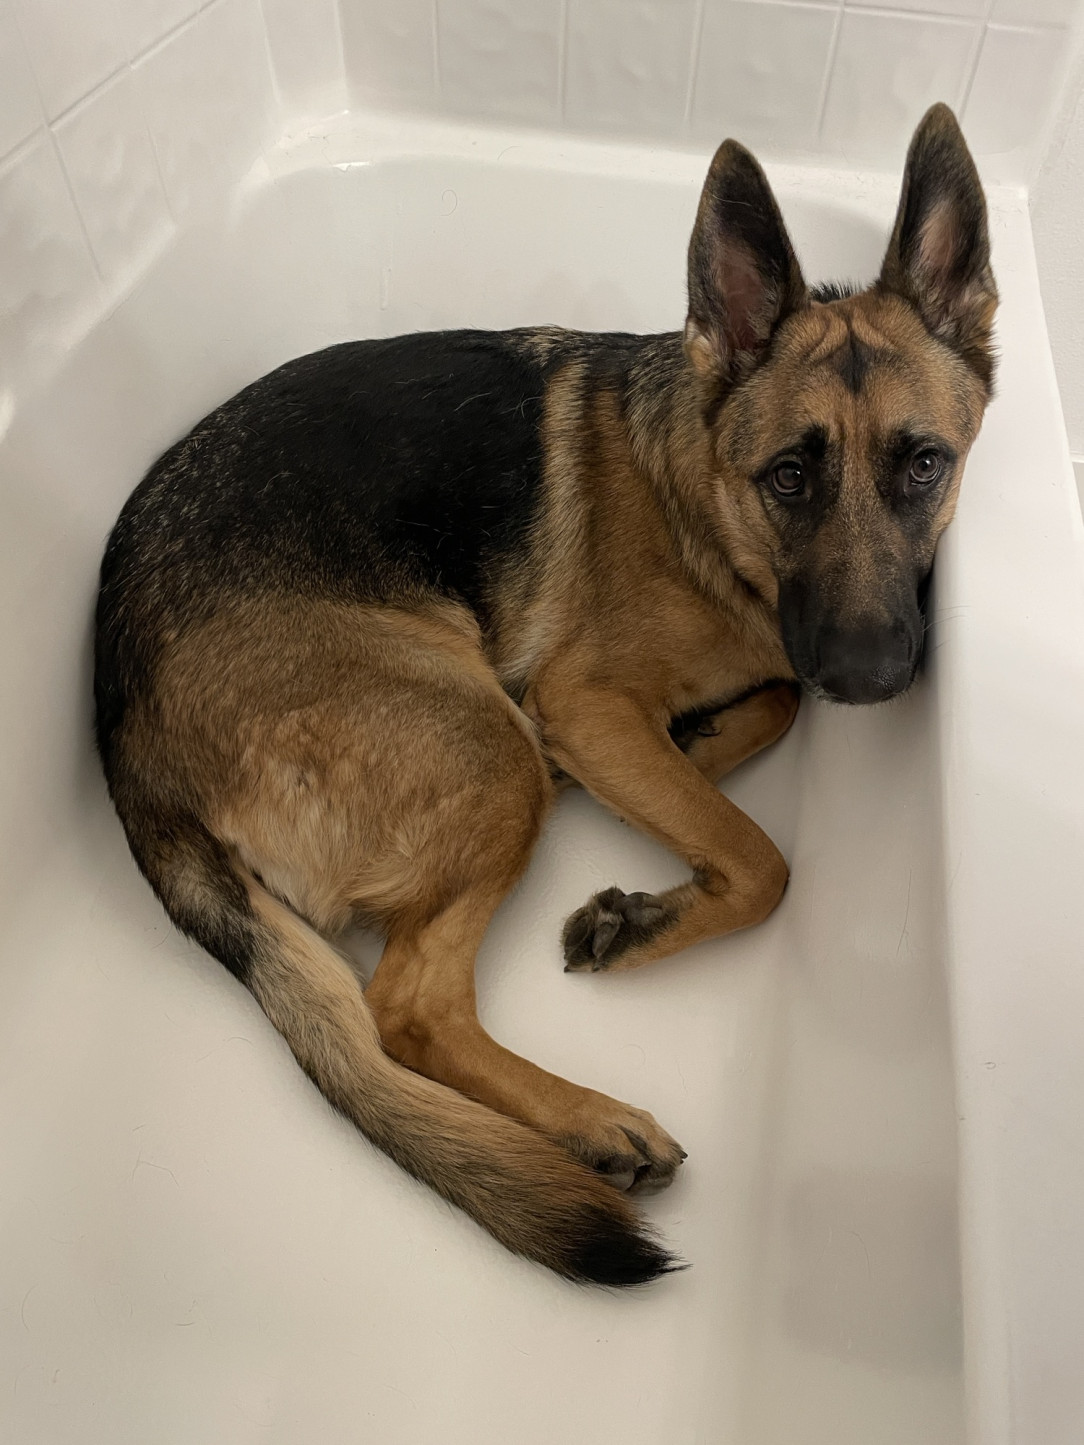 She loves the bathtub